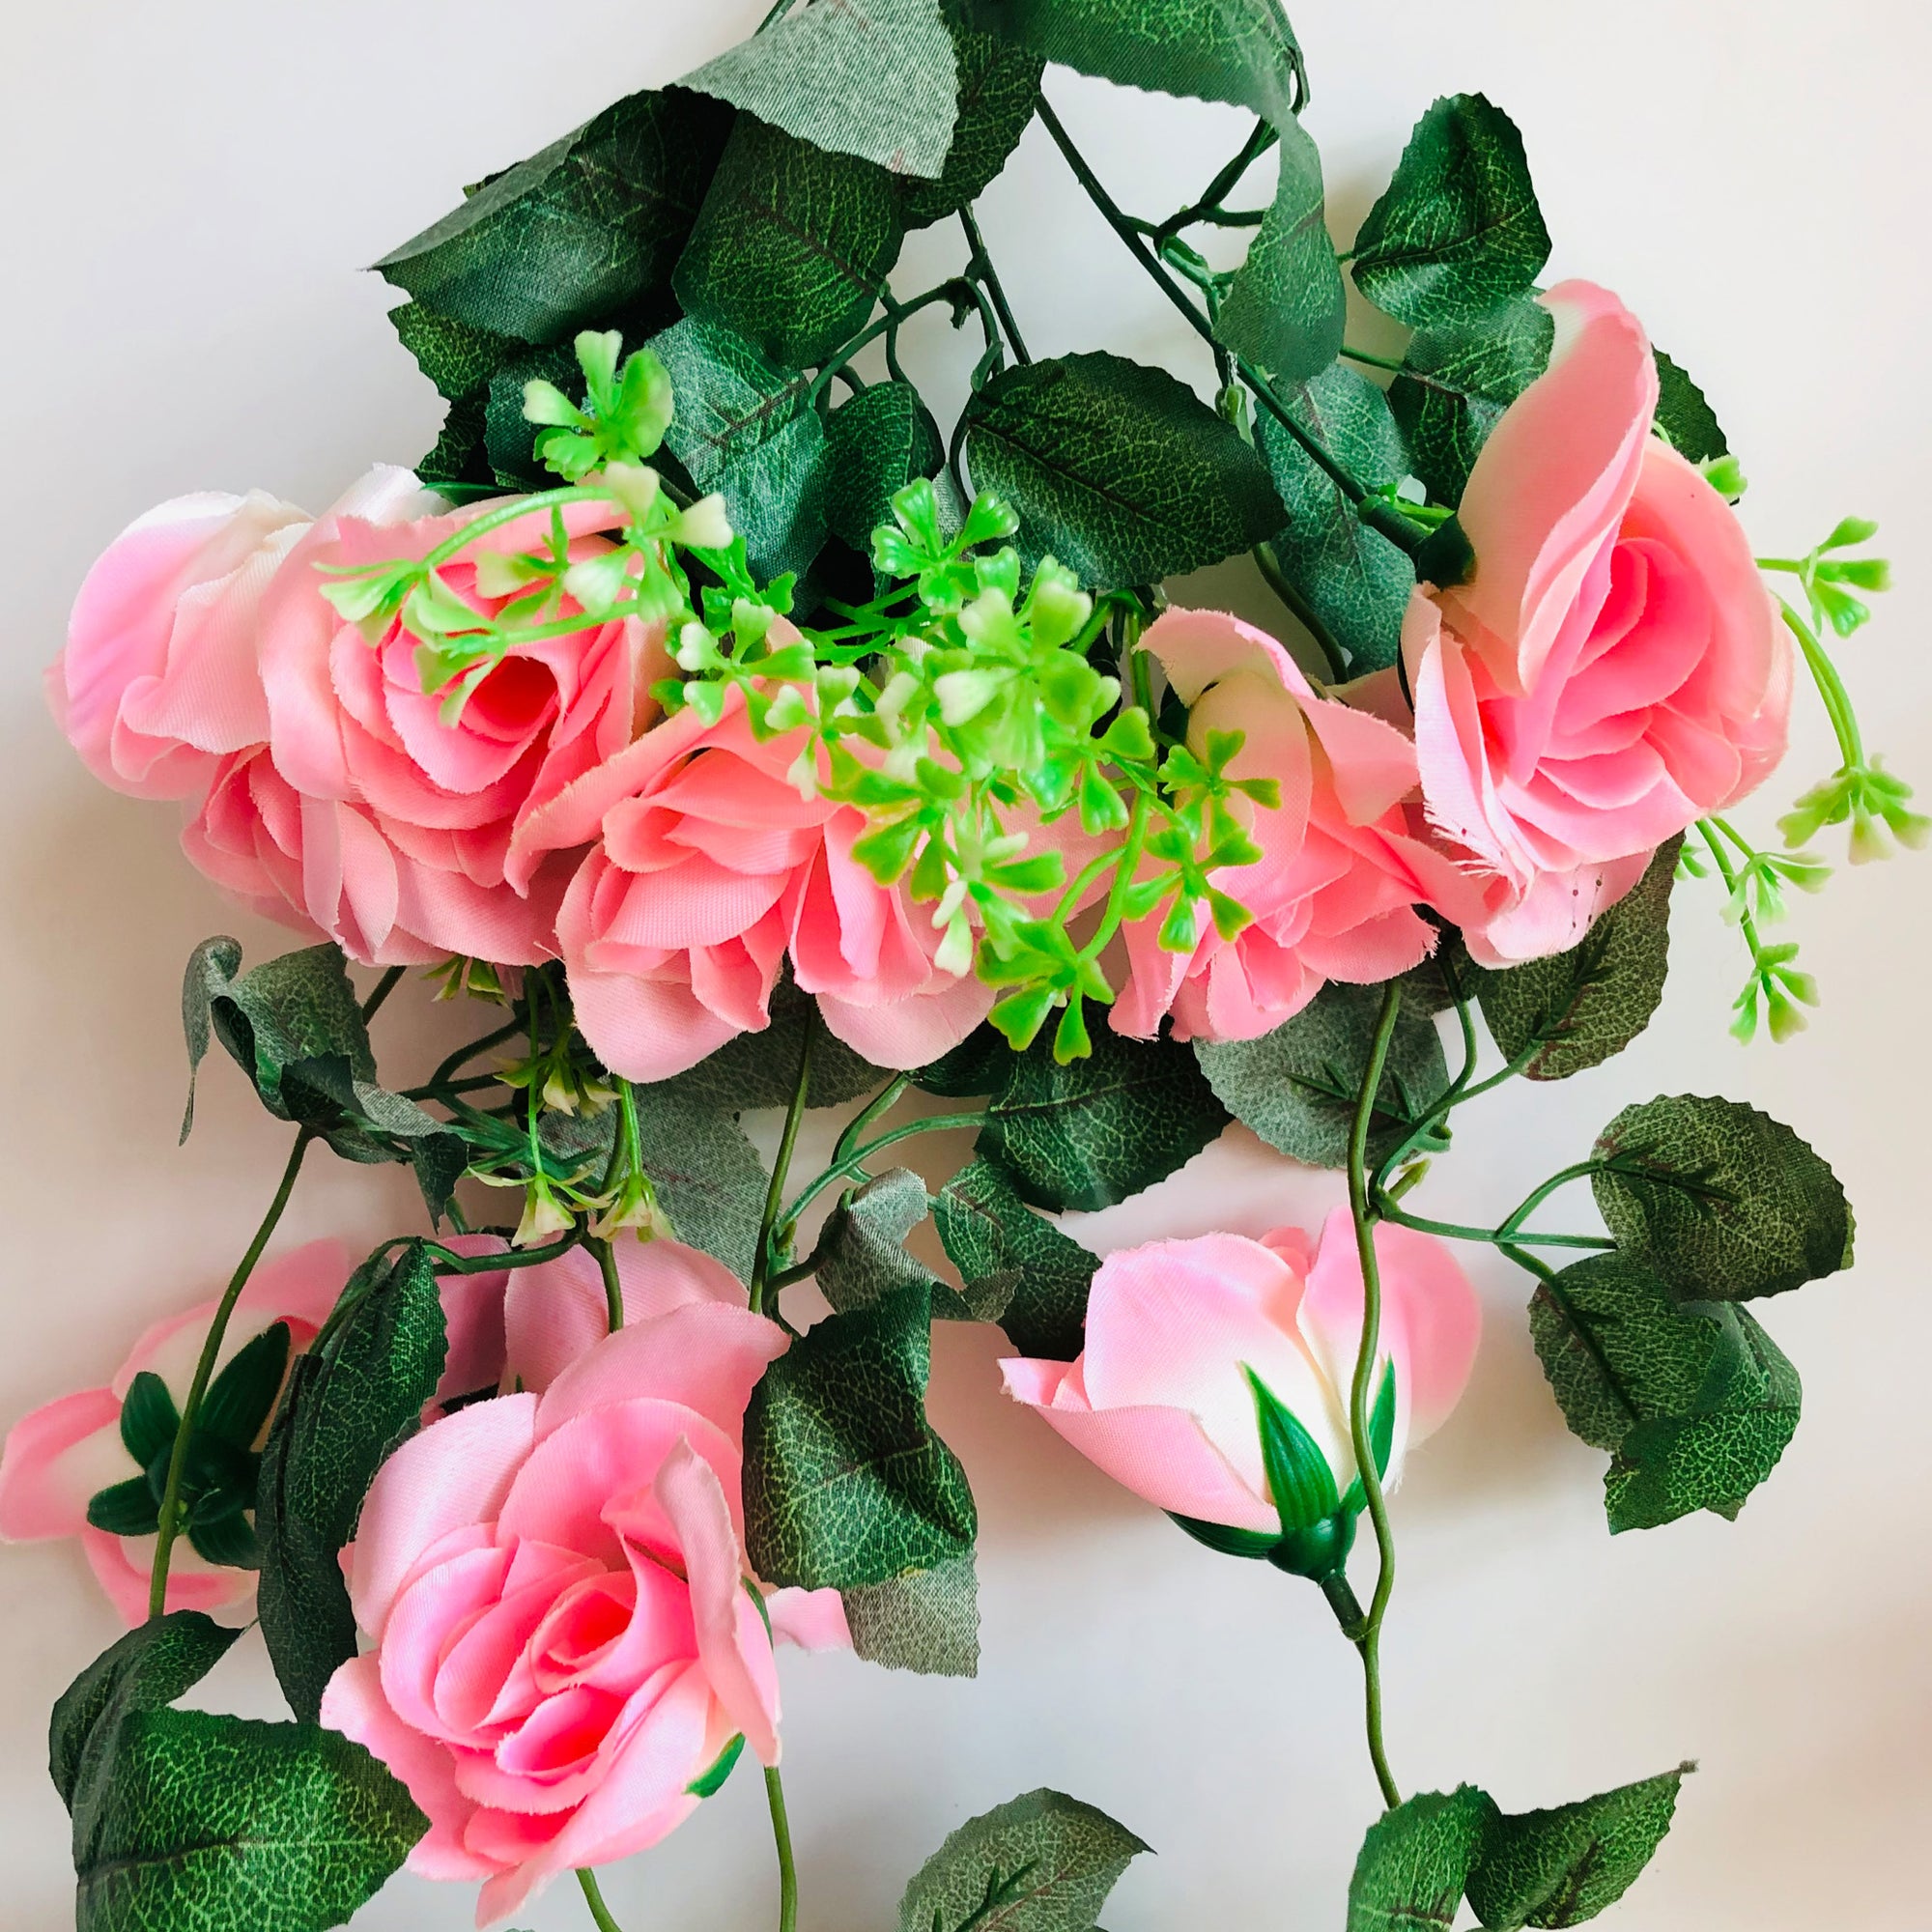 Artificial Flower Vines Silk Rose Garland for Home Outdoor Decor